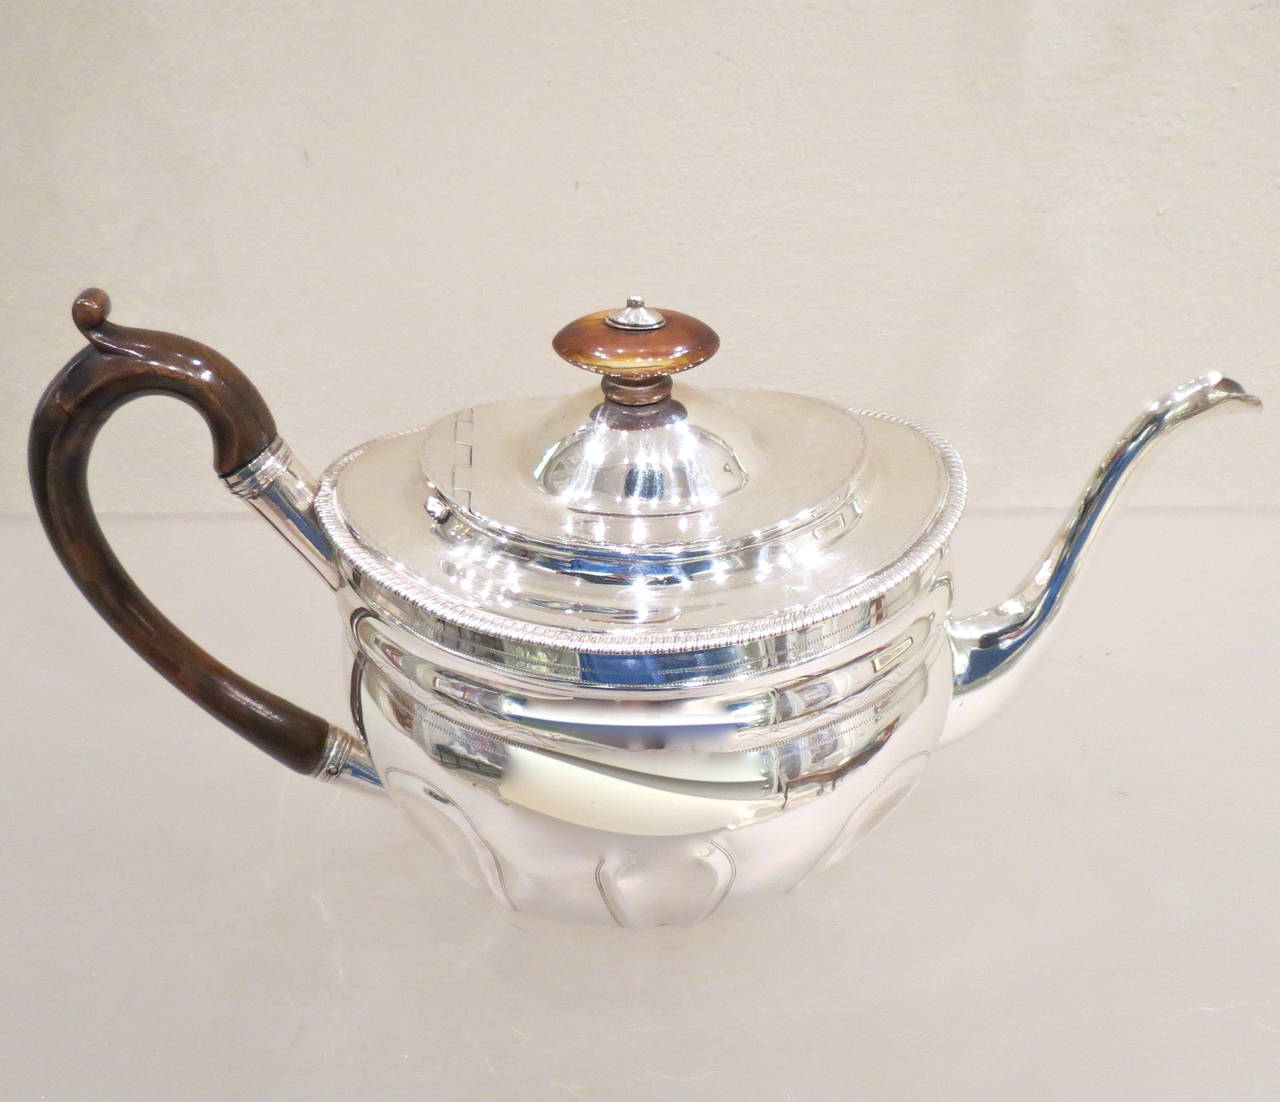 Georgian sterling silver tea pot, London, 1805, Charles. Measure: Stands 6 1/2